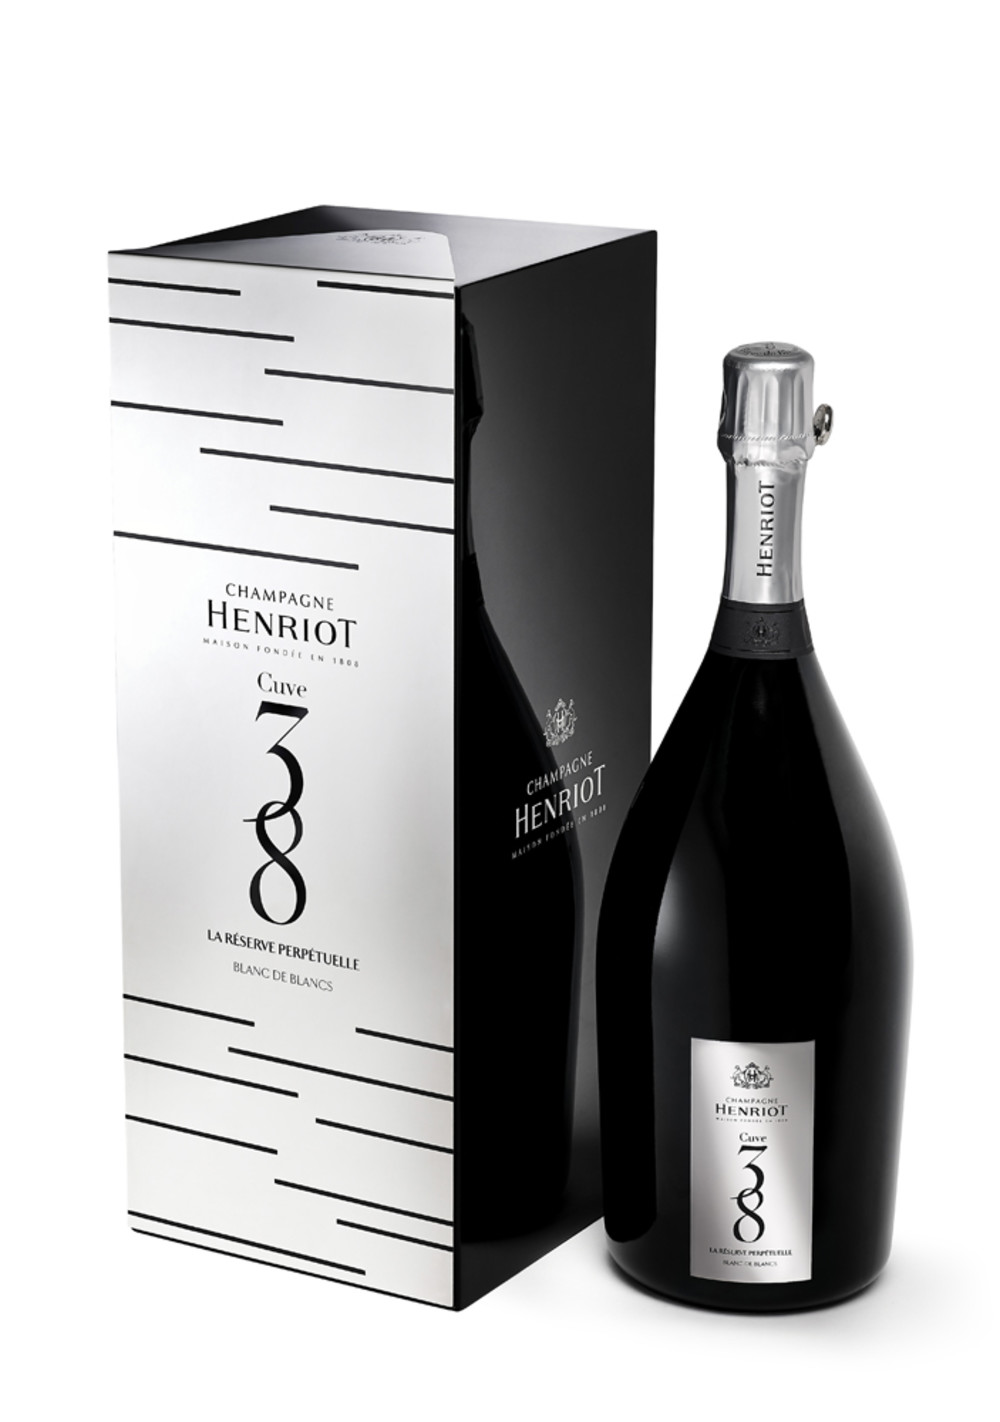 Champagne HENRIOT_CUVE 38_013 Coffret.jpg